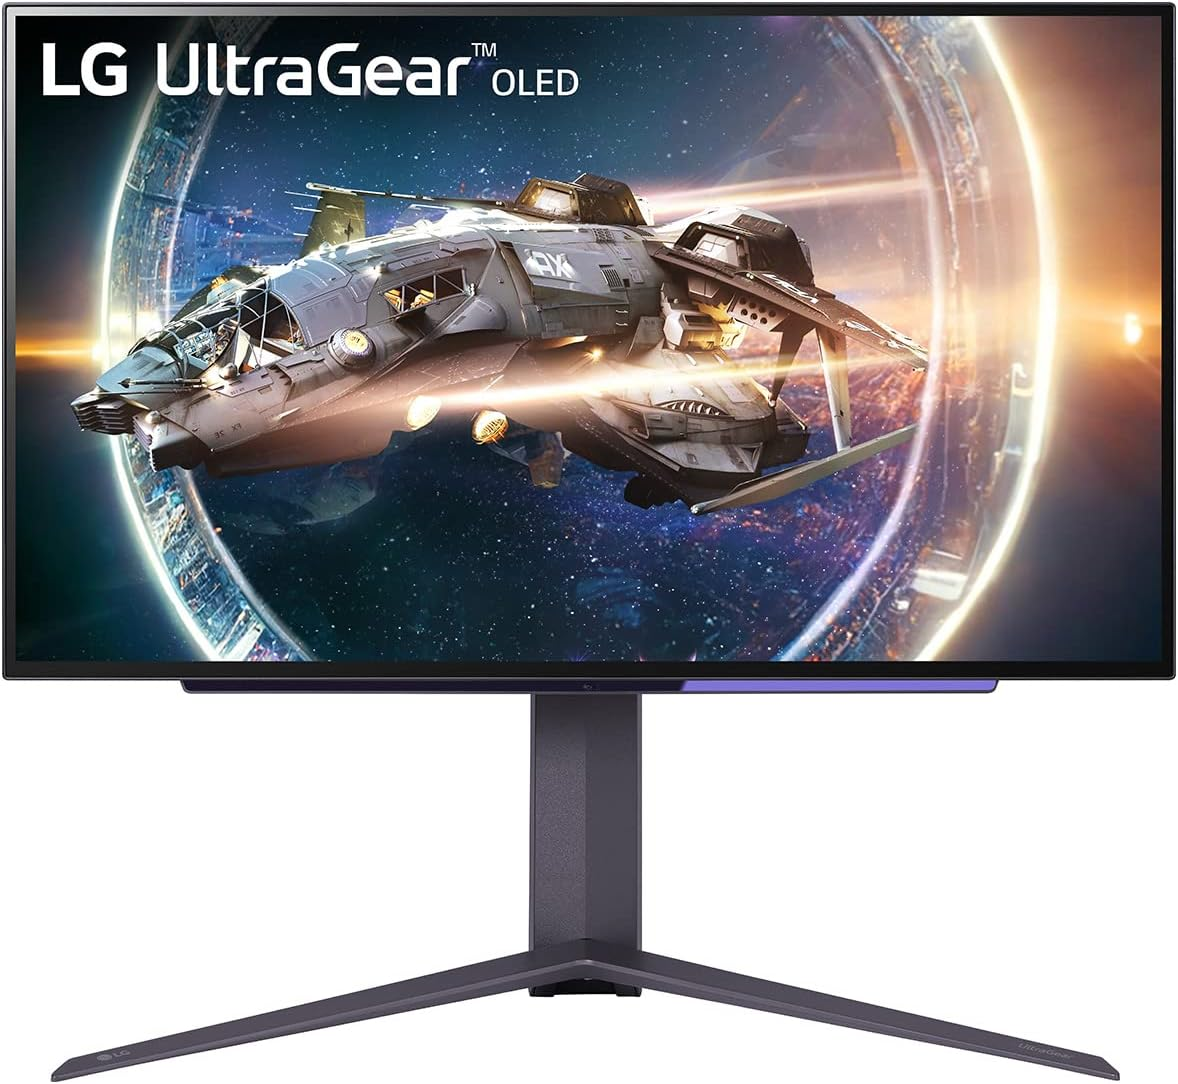 LG 27" Ultragear OLED | Tellagraph.com